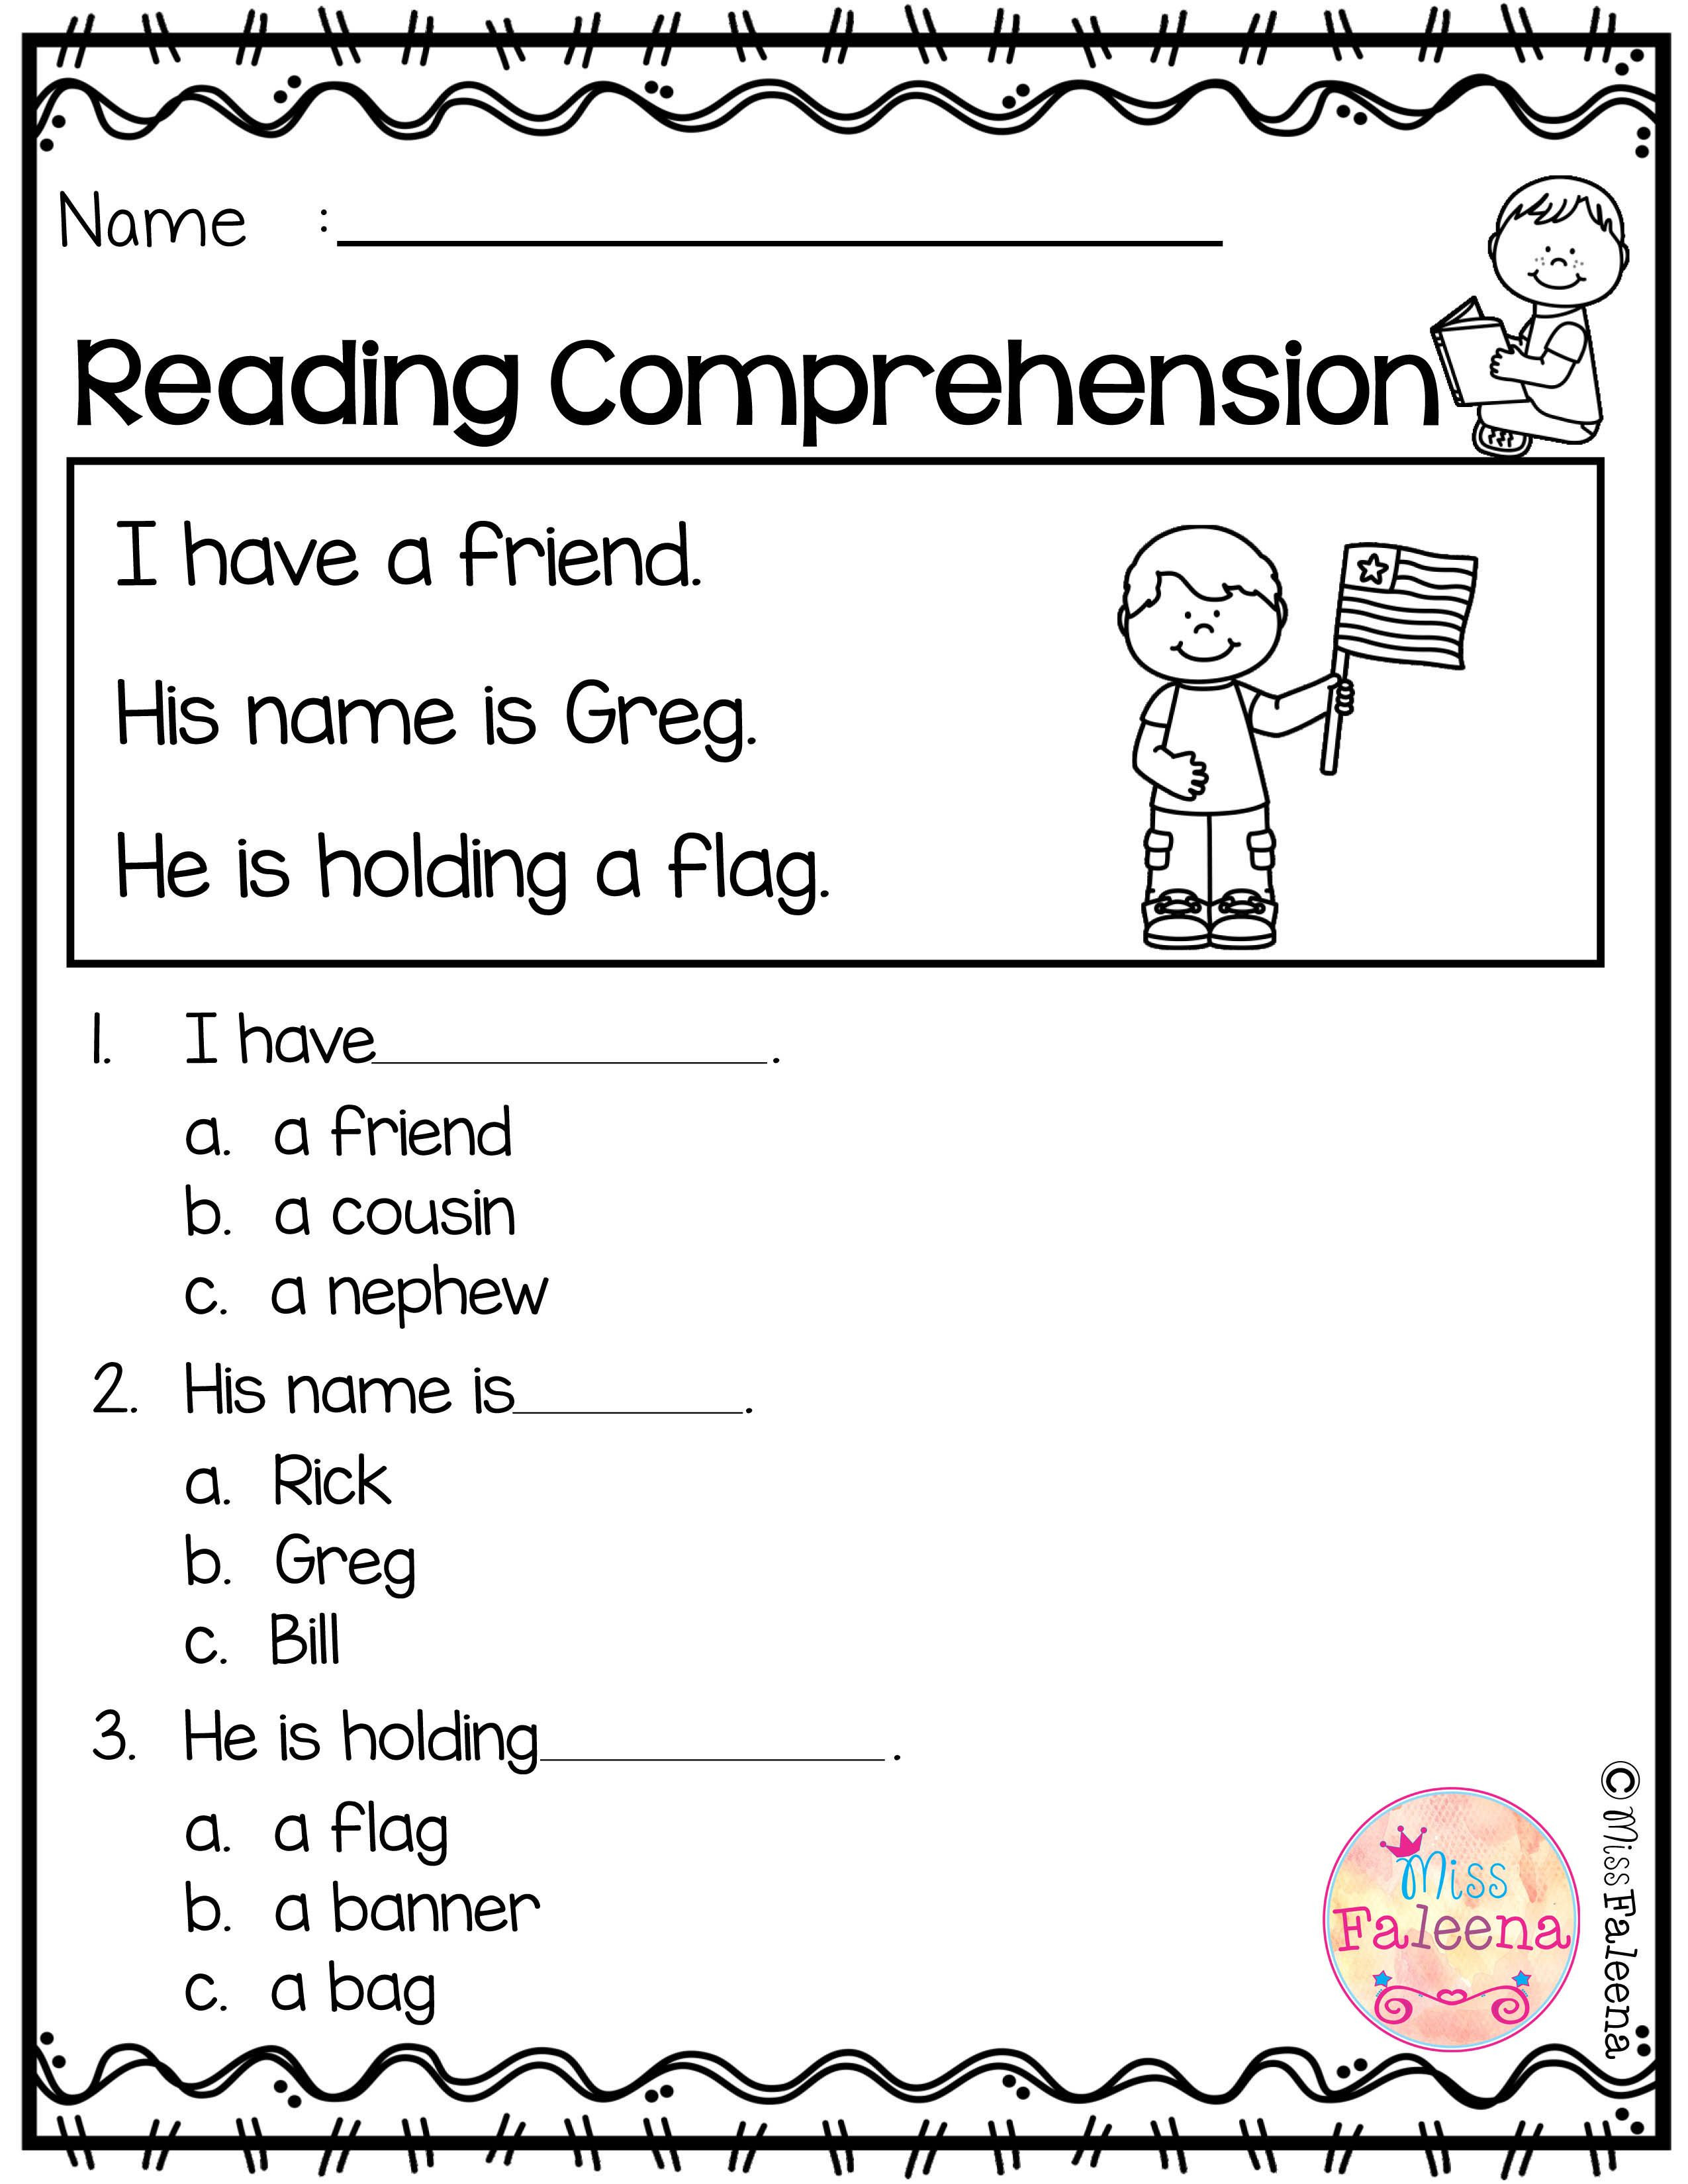 Comprehension Worksheets for Kindergarten Free Reading Prehension with Images